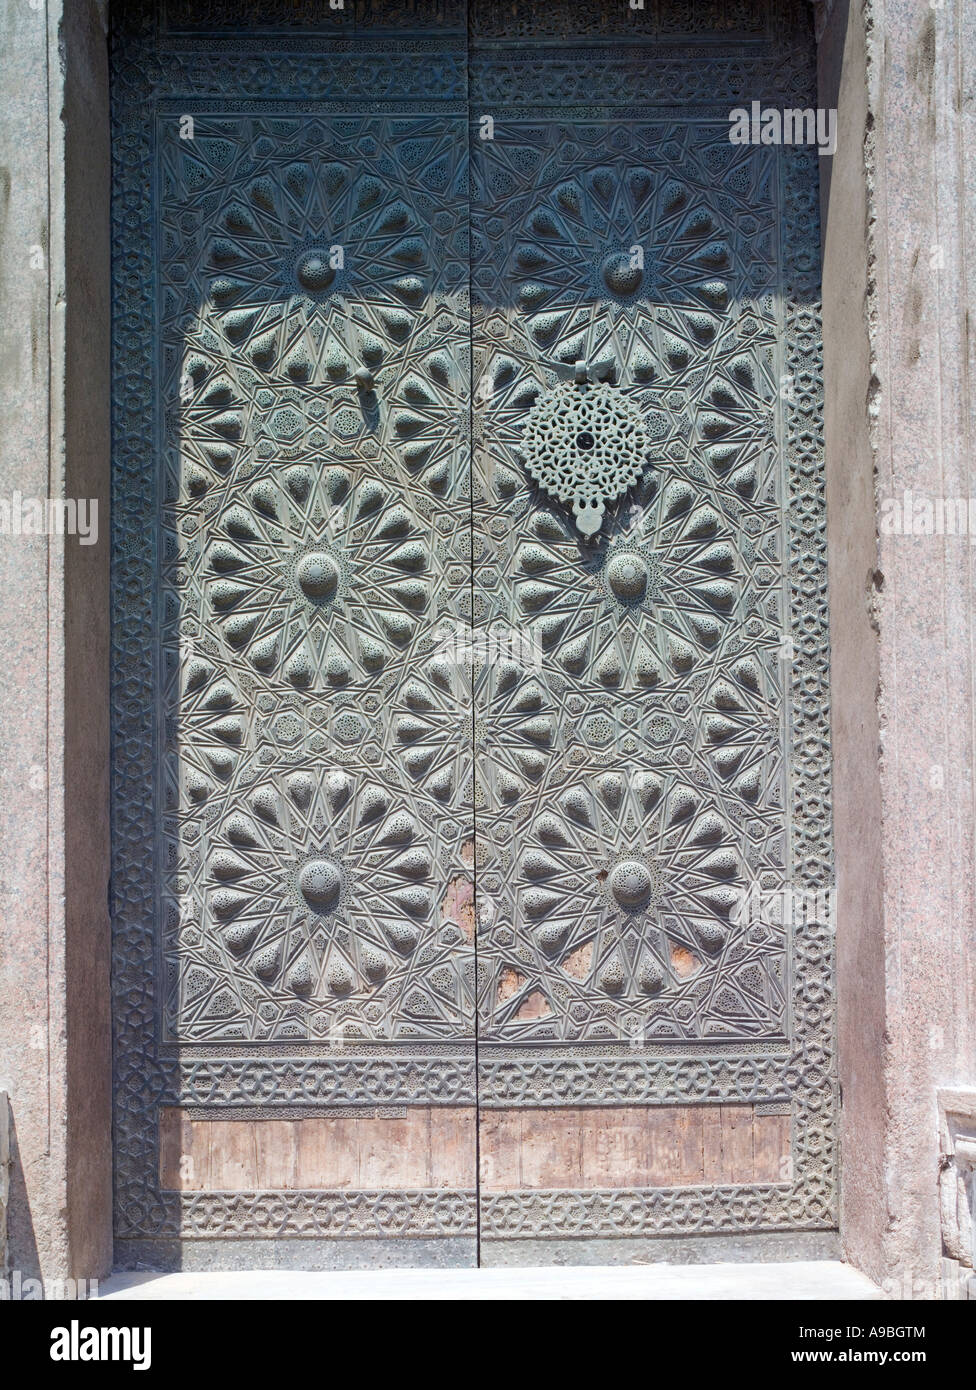 Sultan Hasan complex, Cairo, doors from original entrance Stock Photo